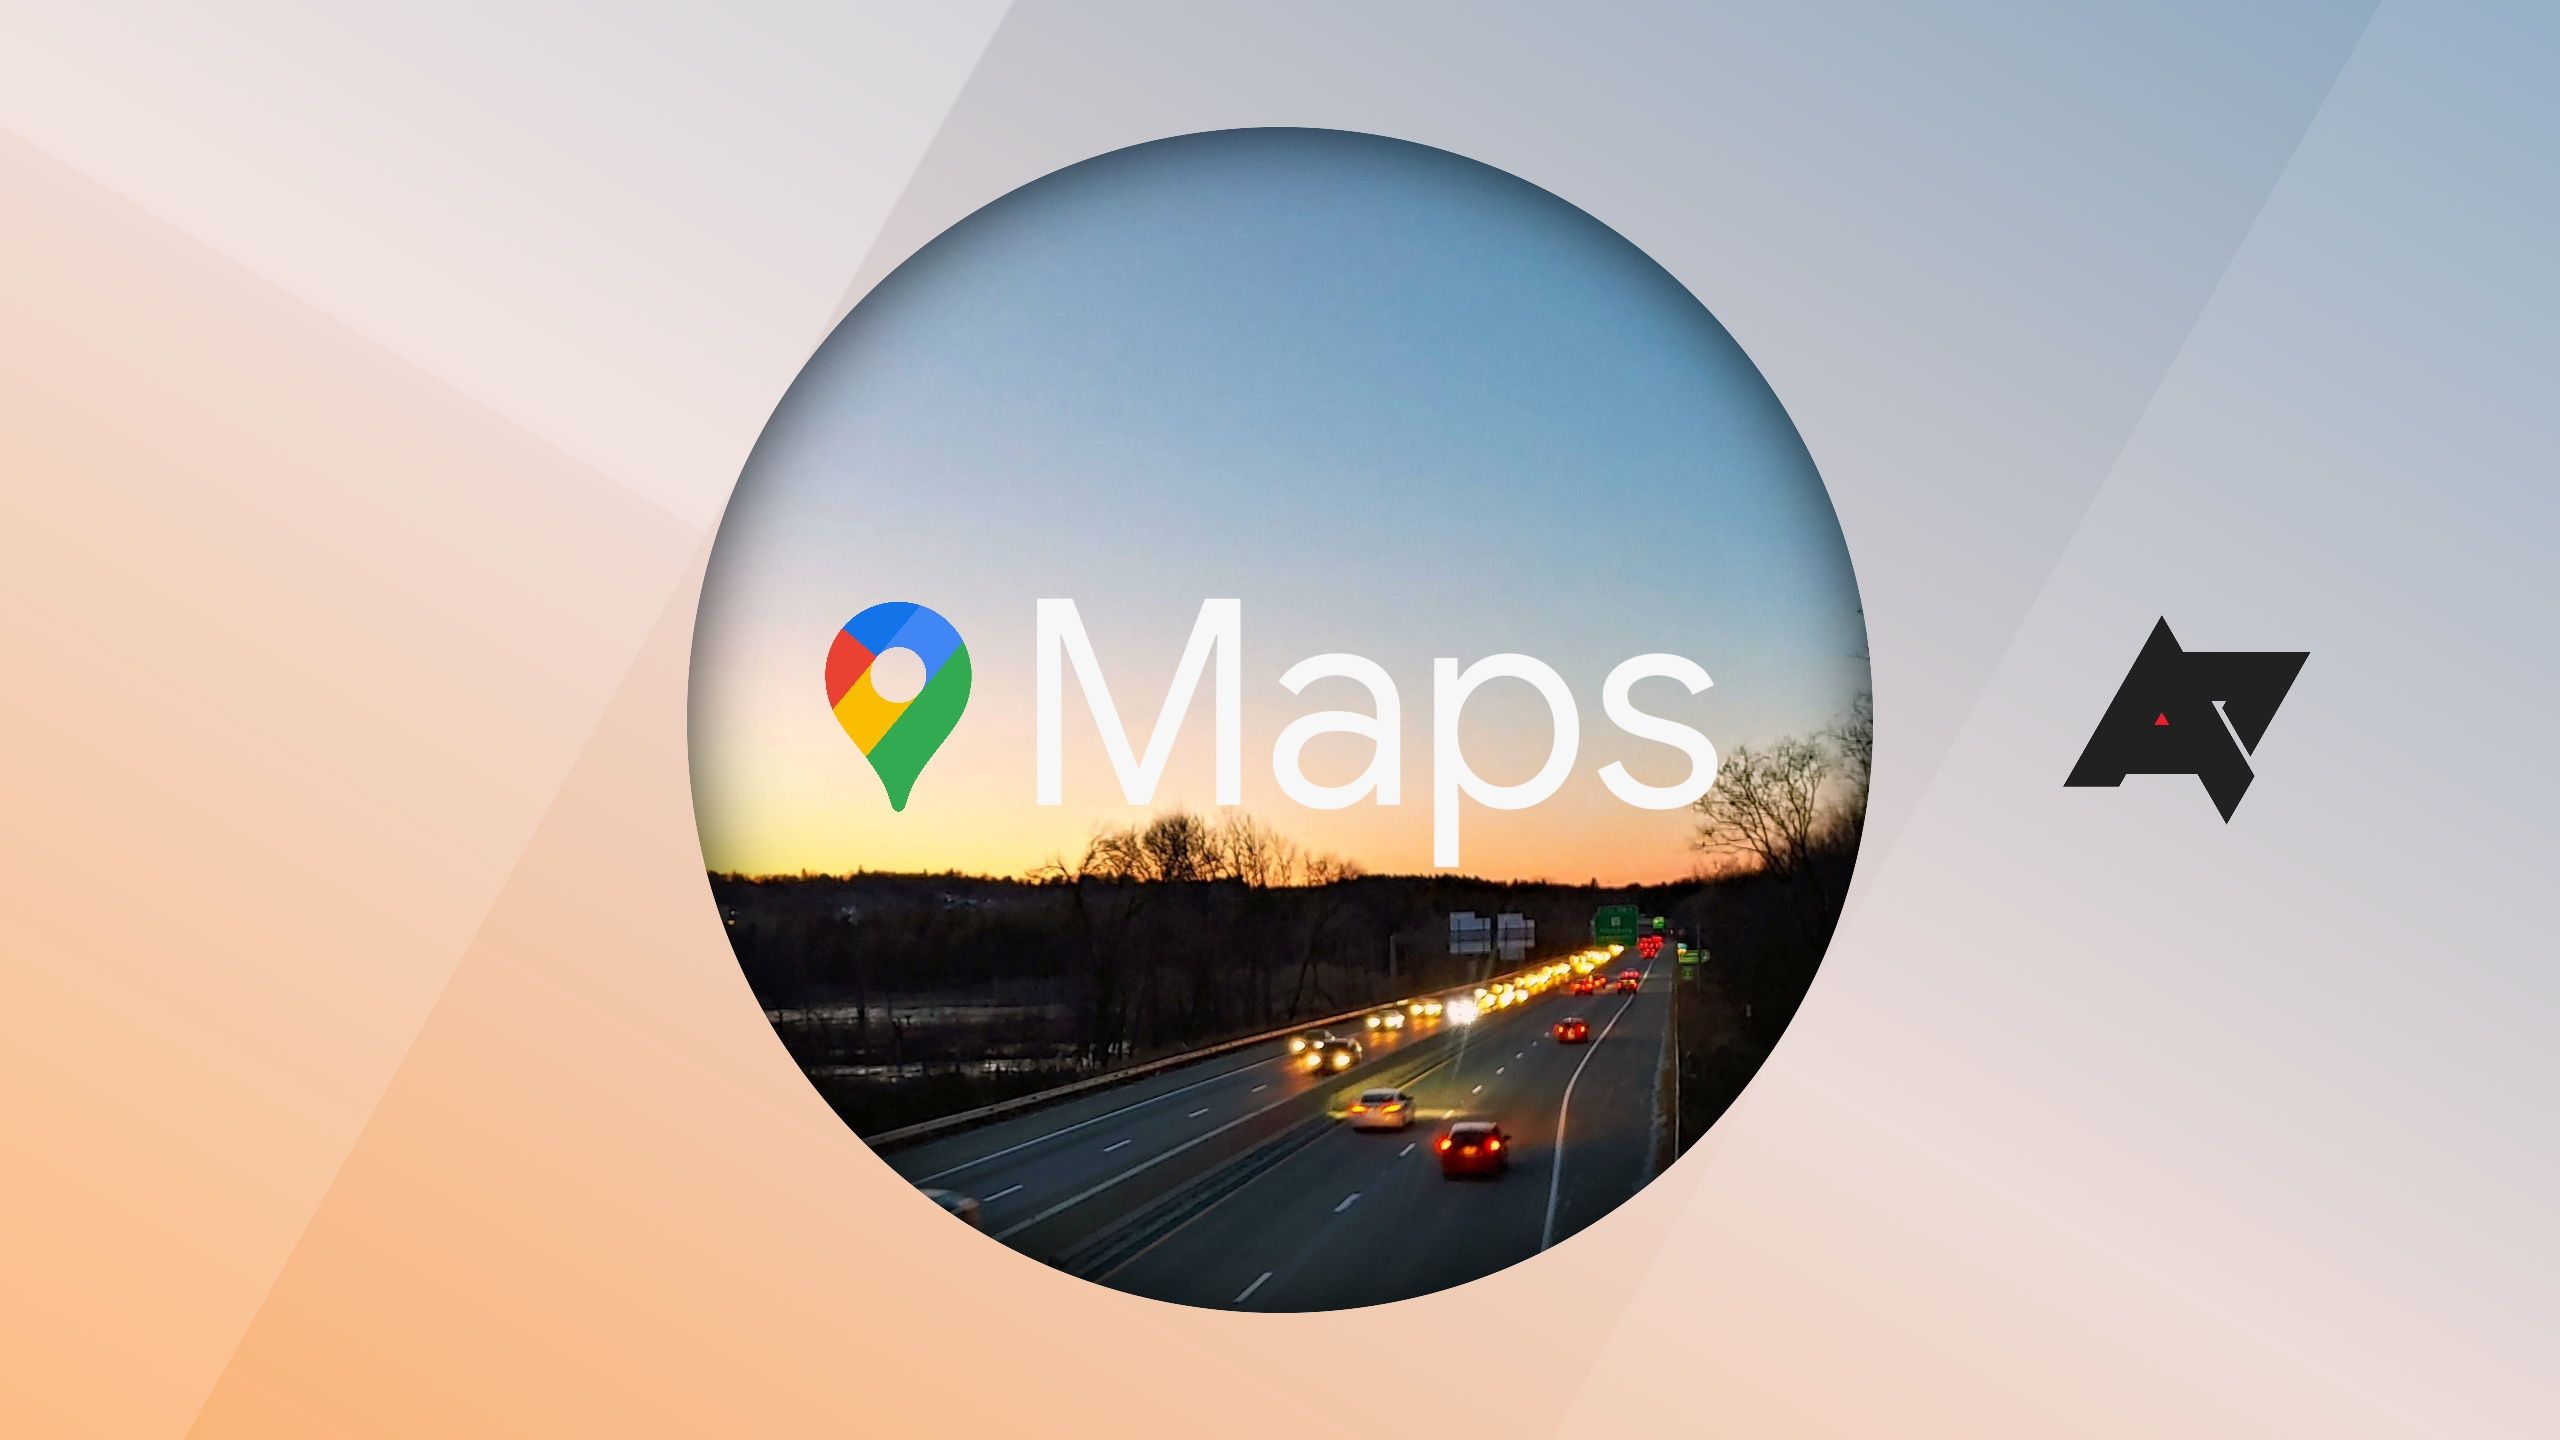 Google Maps - Logo Revolution by Hamza Bounkoub on Dribbble